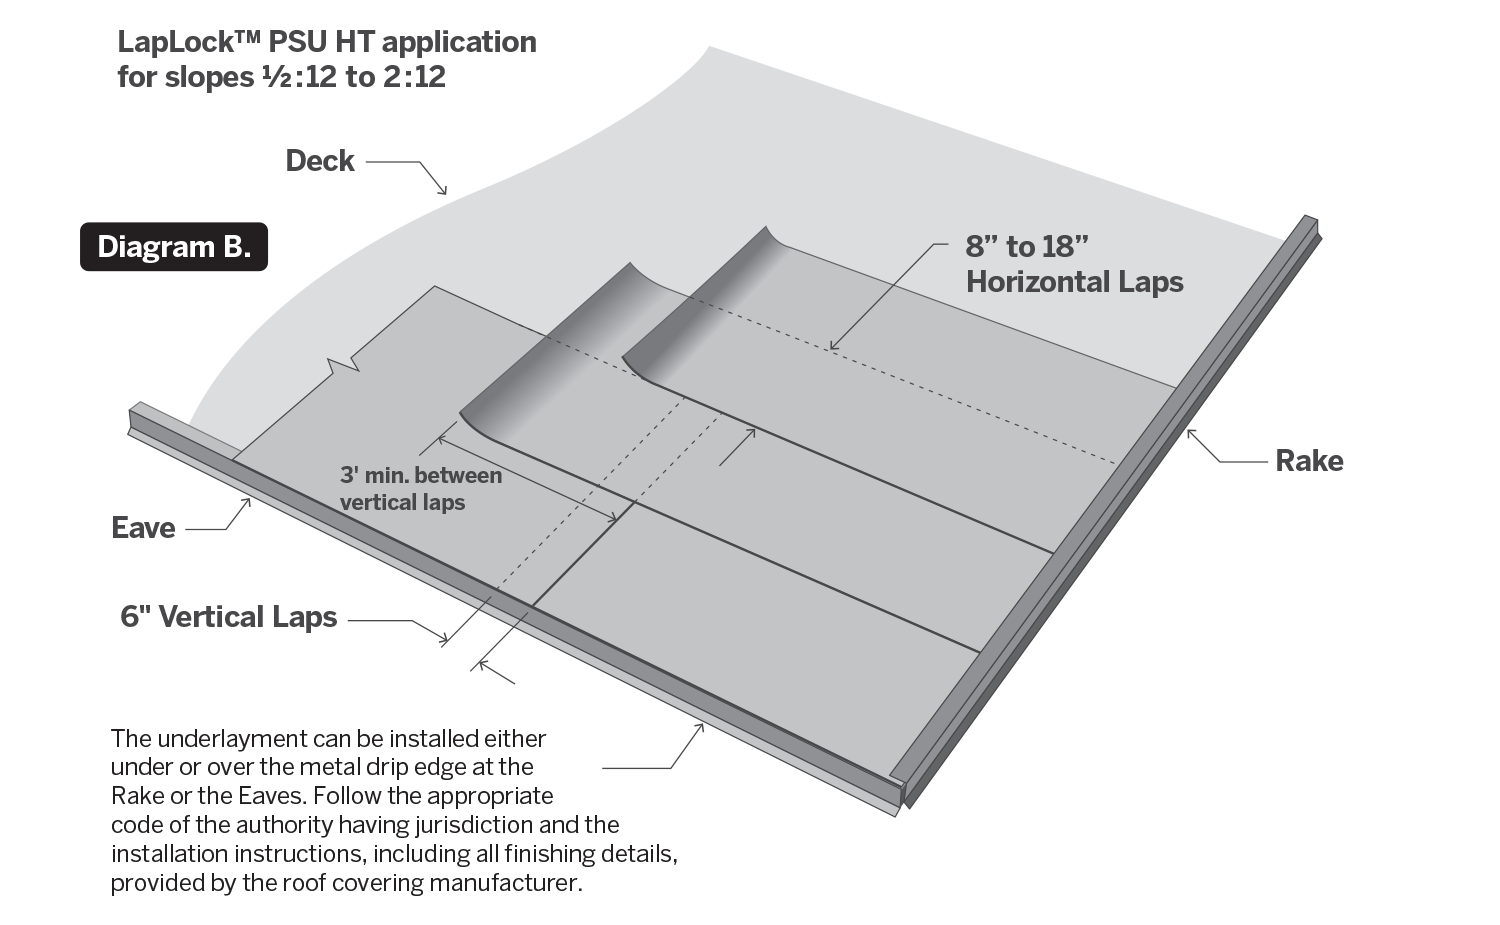 LapLock™ PSU HT install diagram for slopes 1/2:12 to 2:12